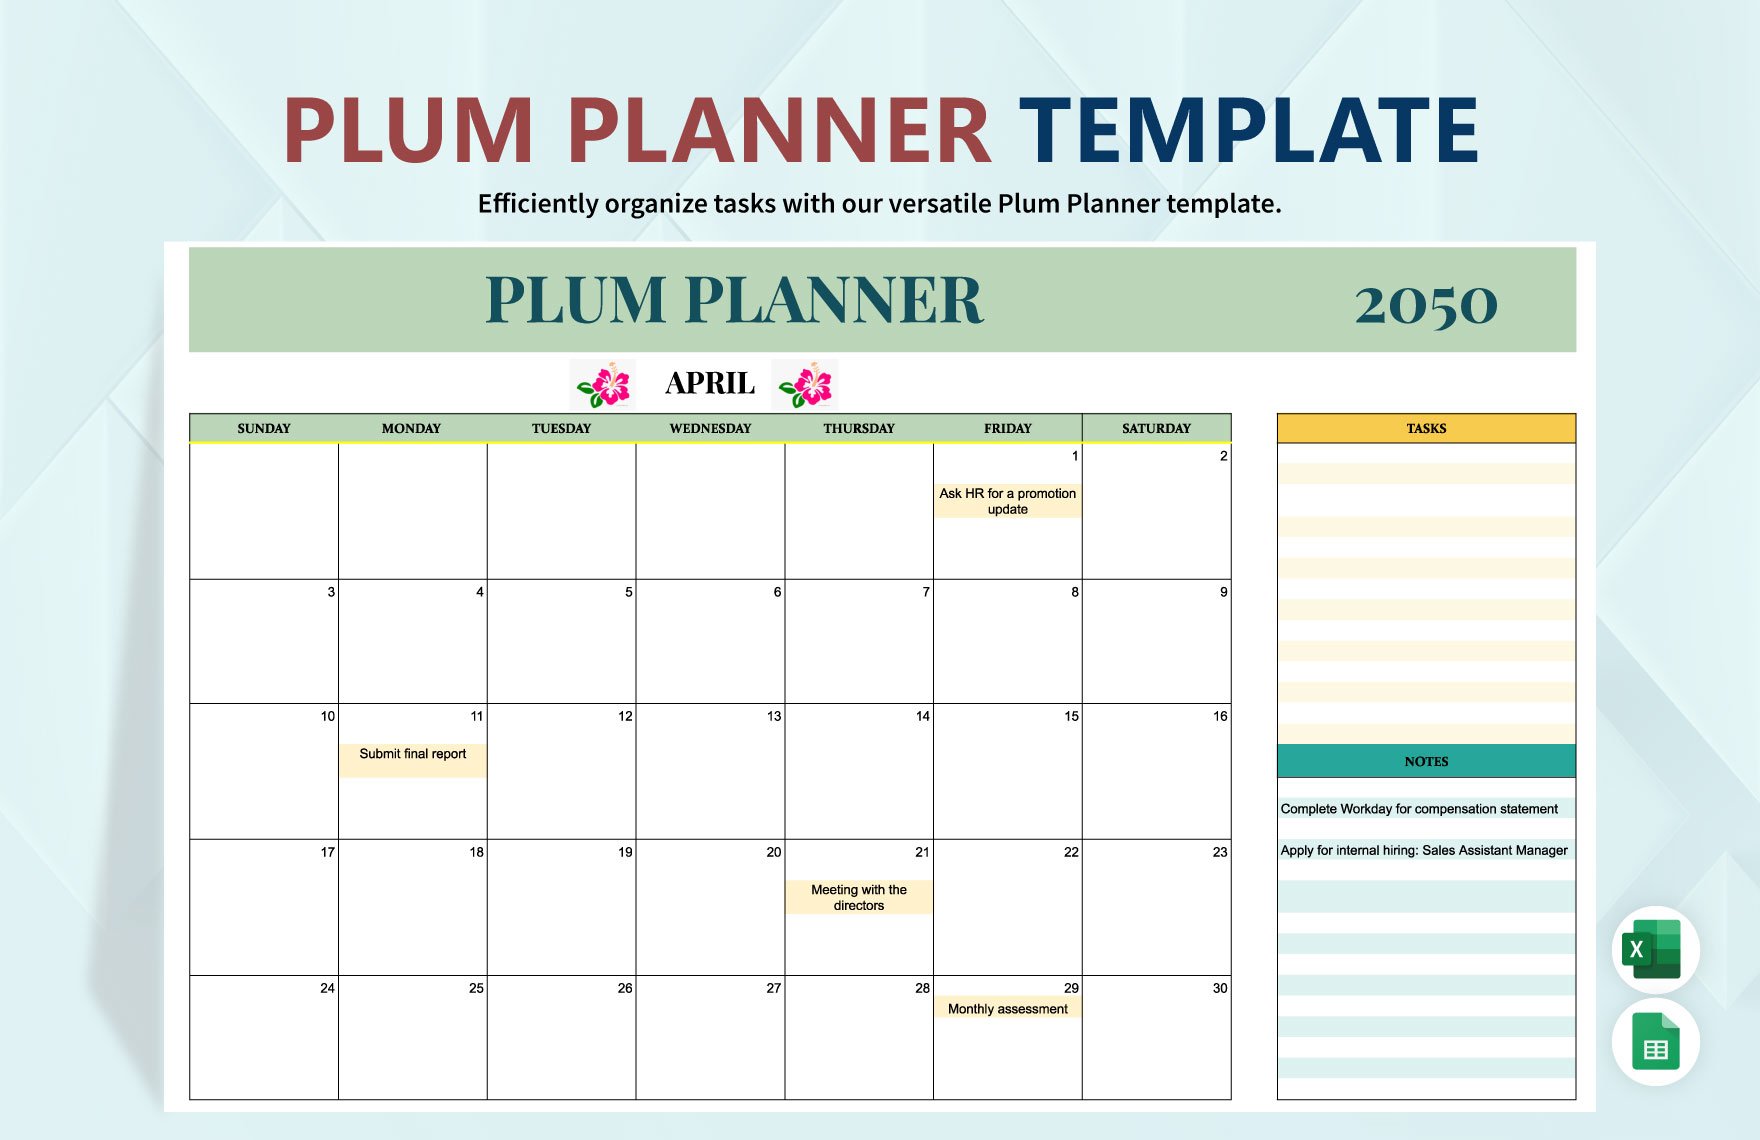 Plum Planner in Excel, Google Sheets